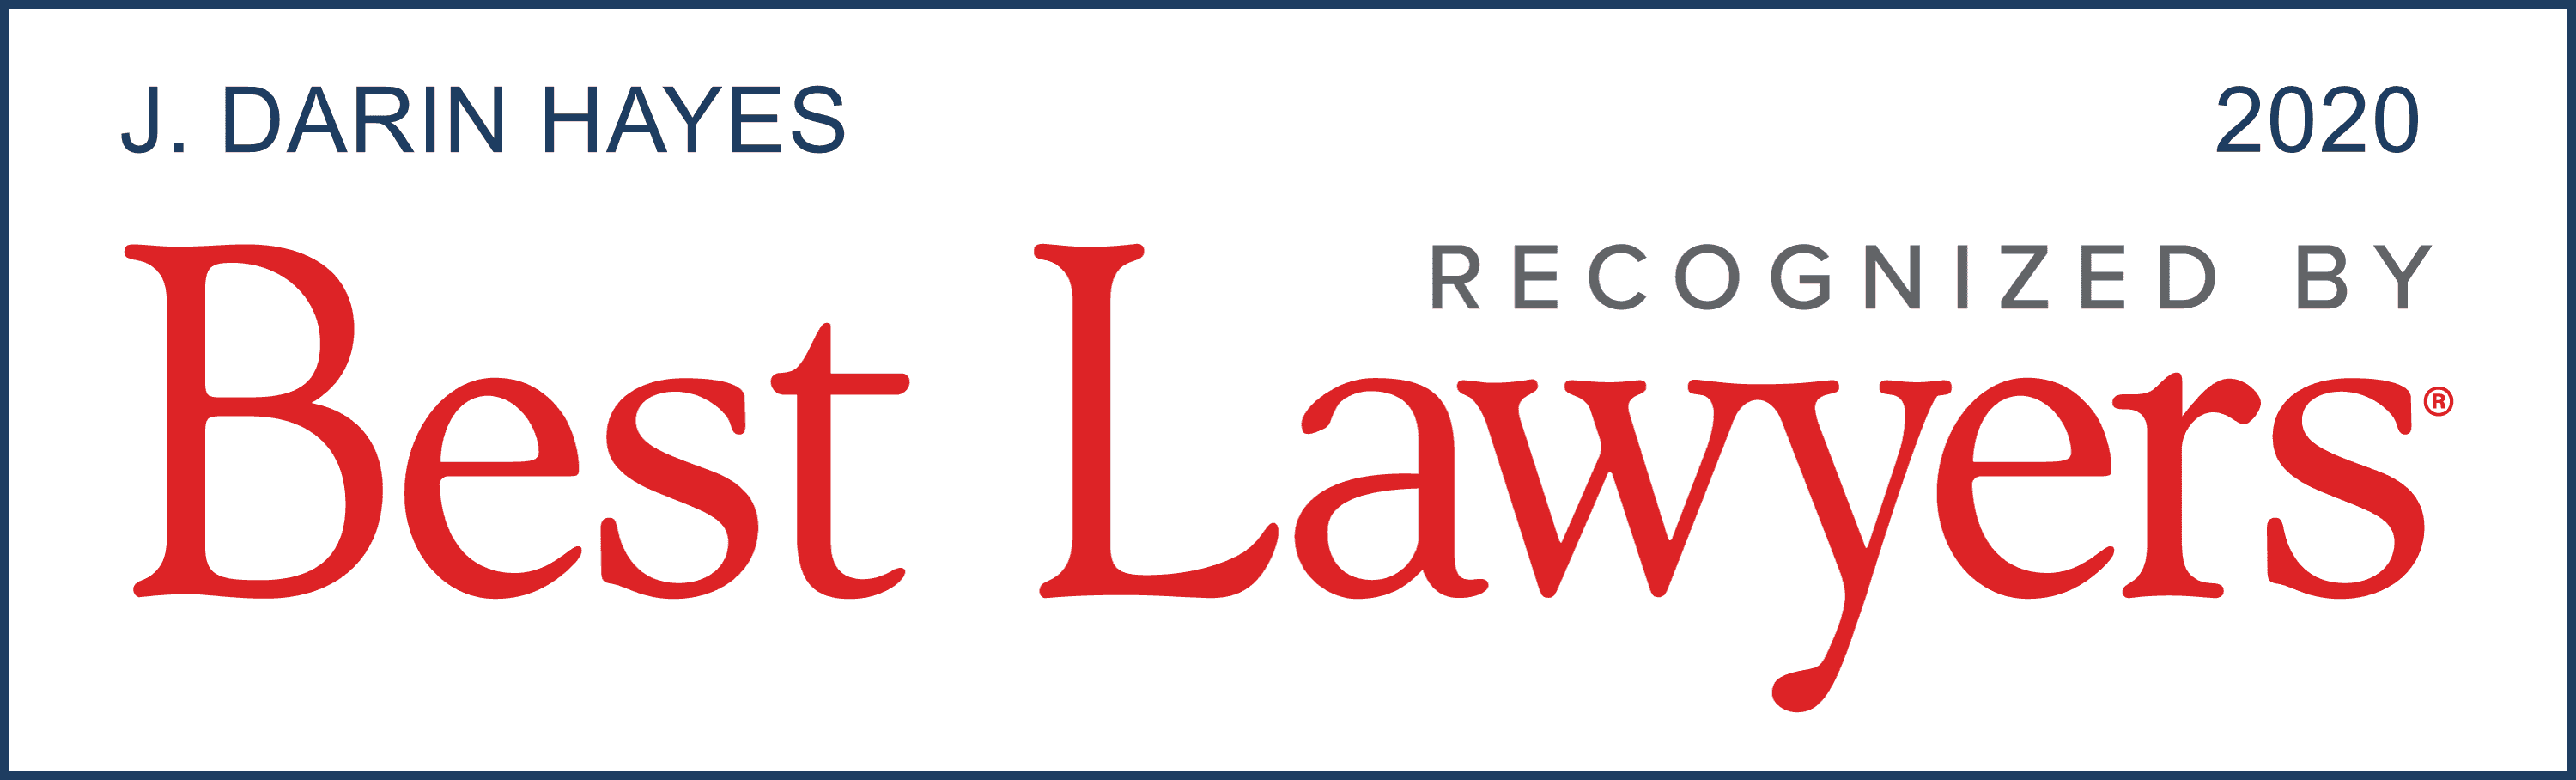 Best Lawyers Logo 